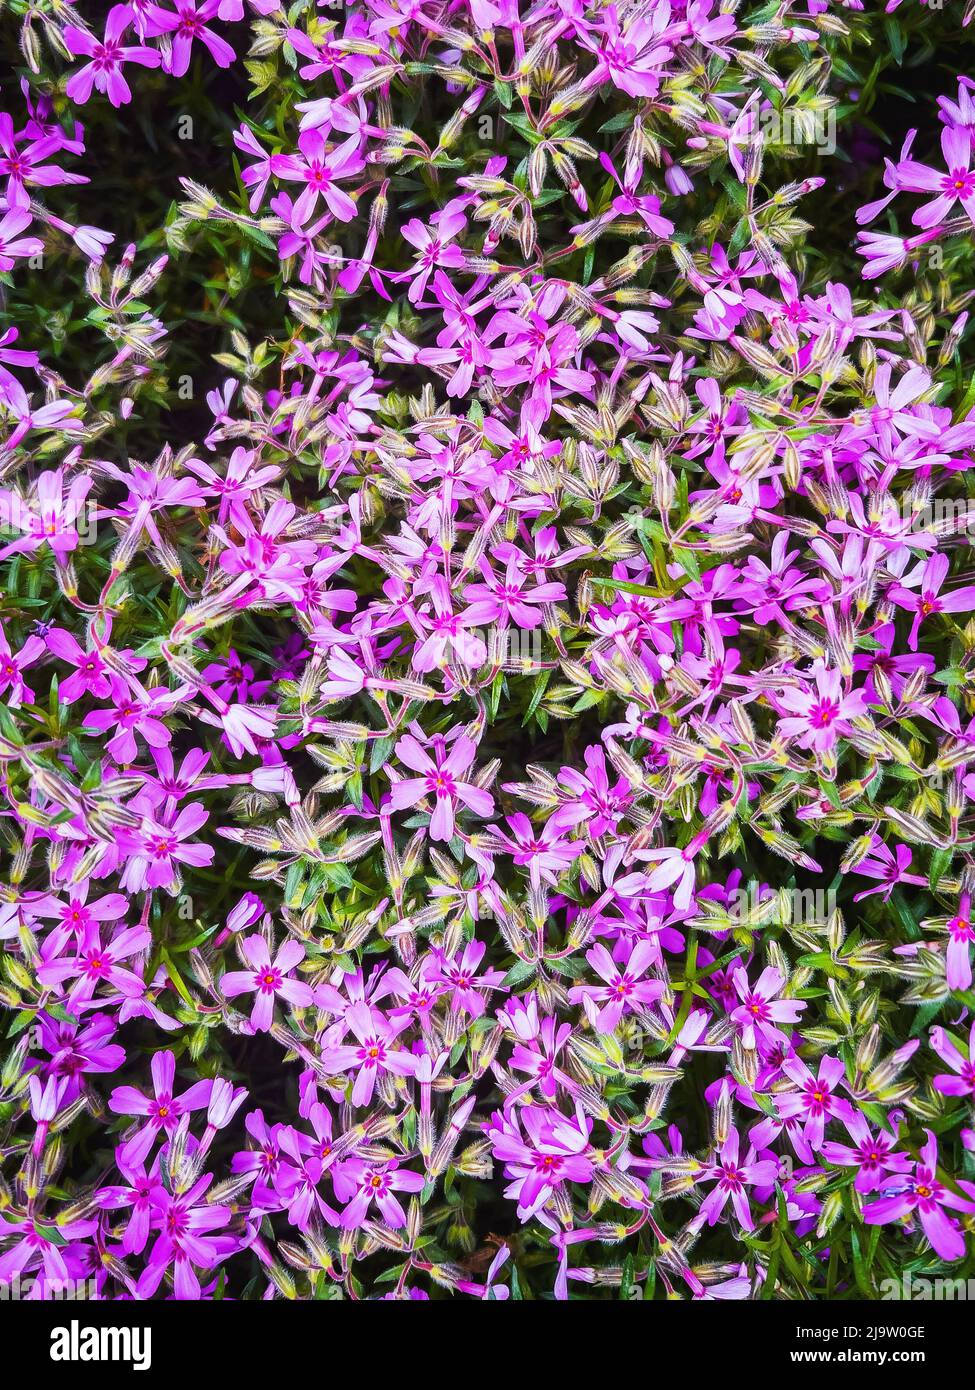 Creeping phlox flowering plant in back yard, top view Stock Photo